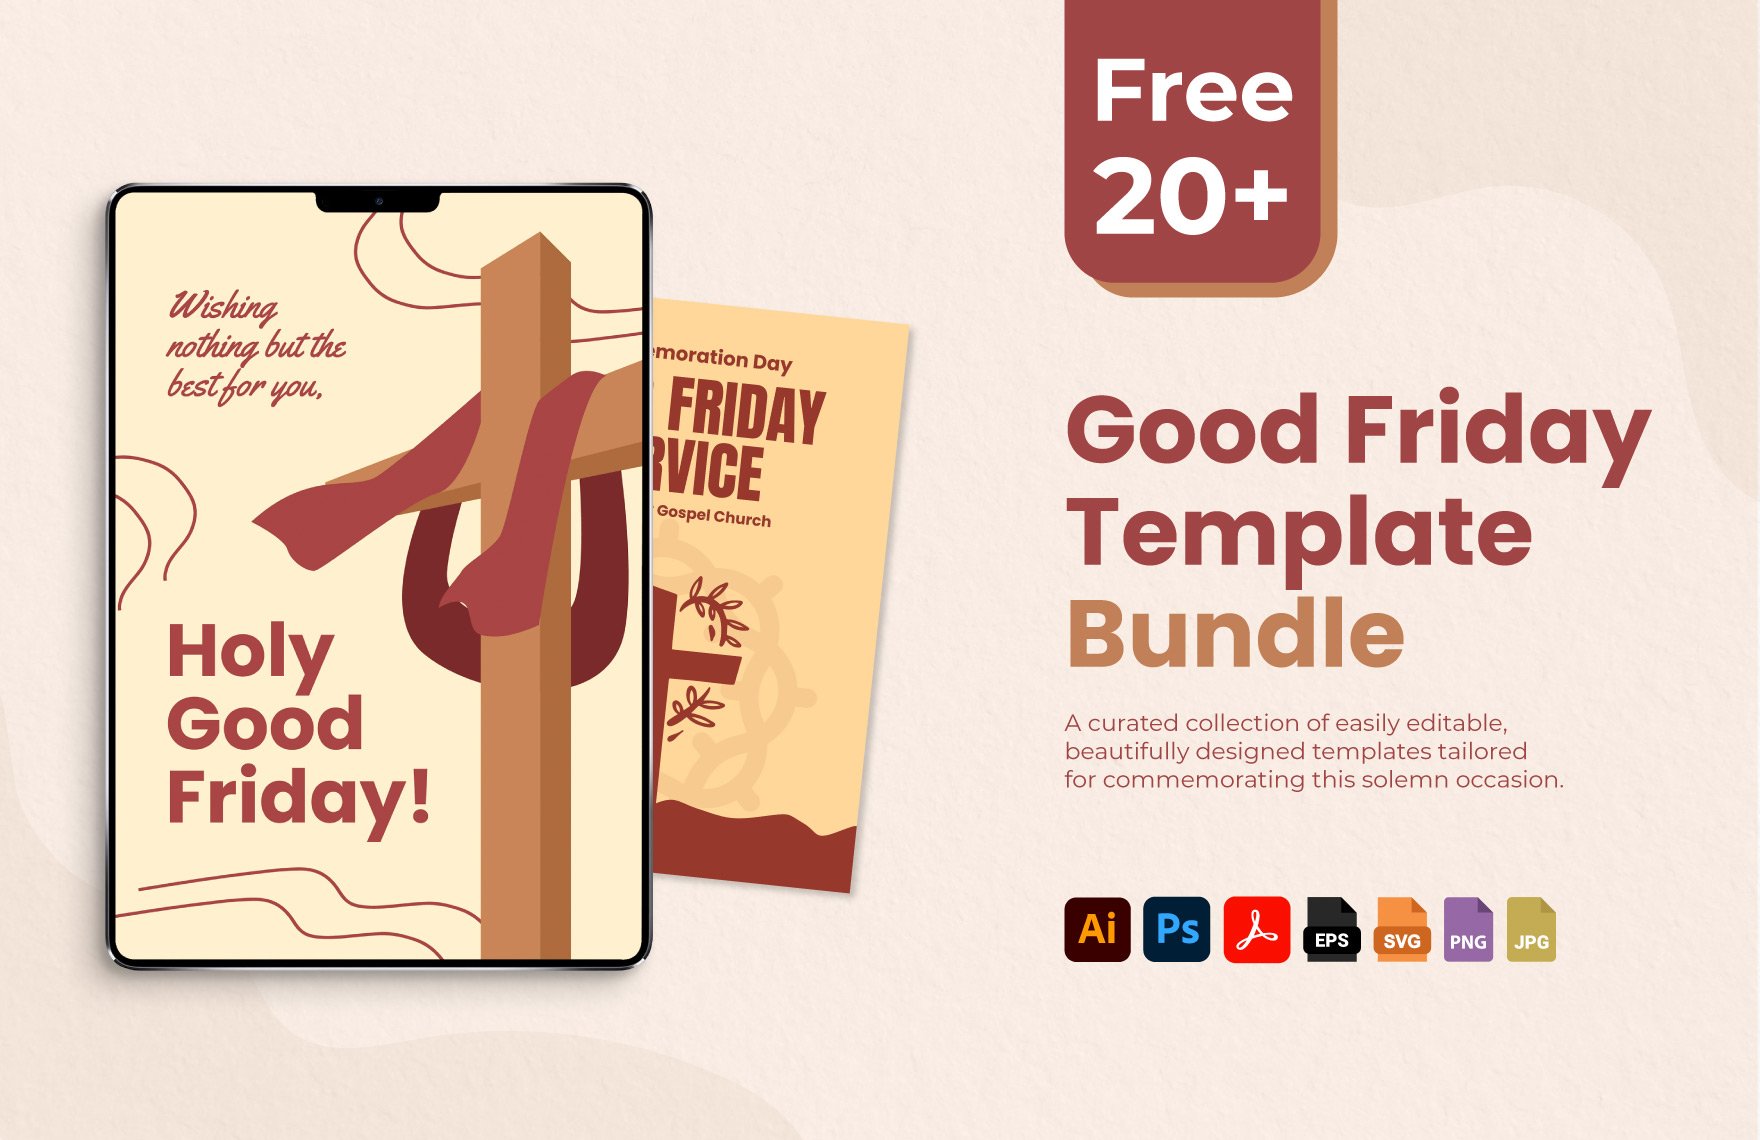 Free 20+ Good Friday Template Bundle